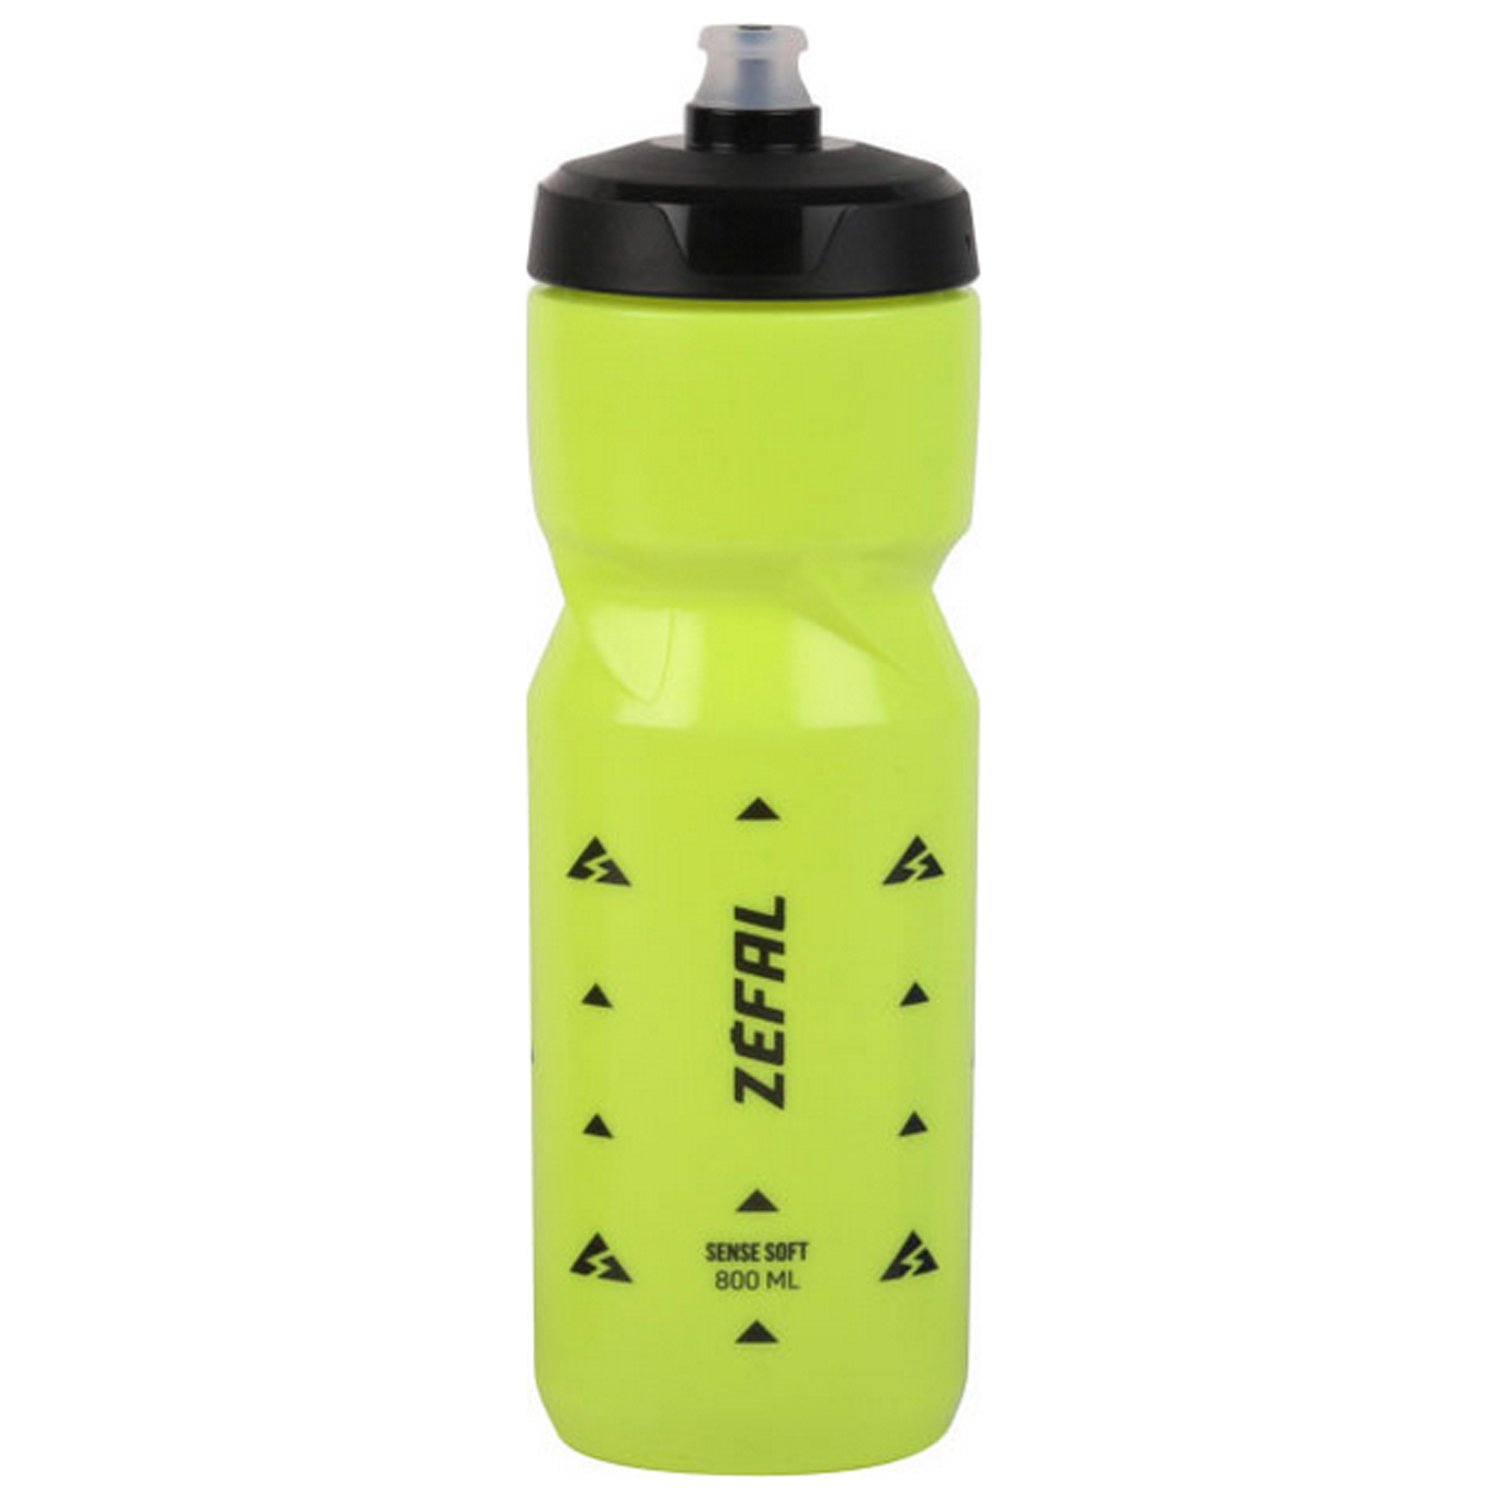 Фляга велосипедная Zefal Sense Soft 80 Bottle Neon, пластик, 800 мл, желтый, 2023, 157N УТ-00337341 - фото 1